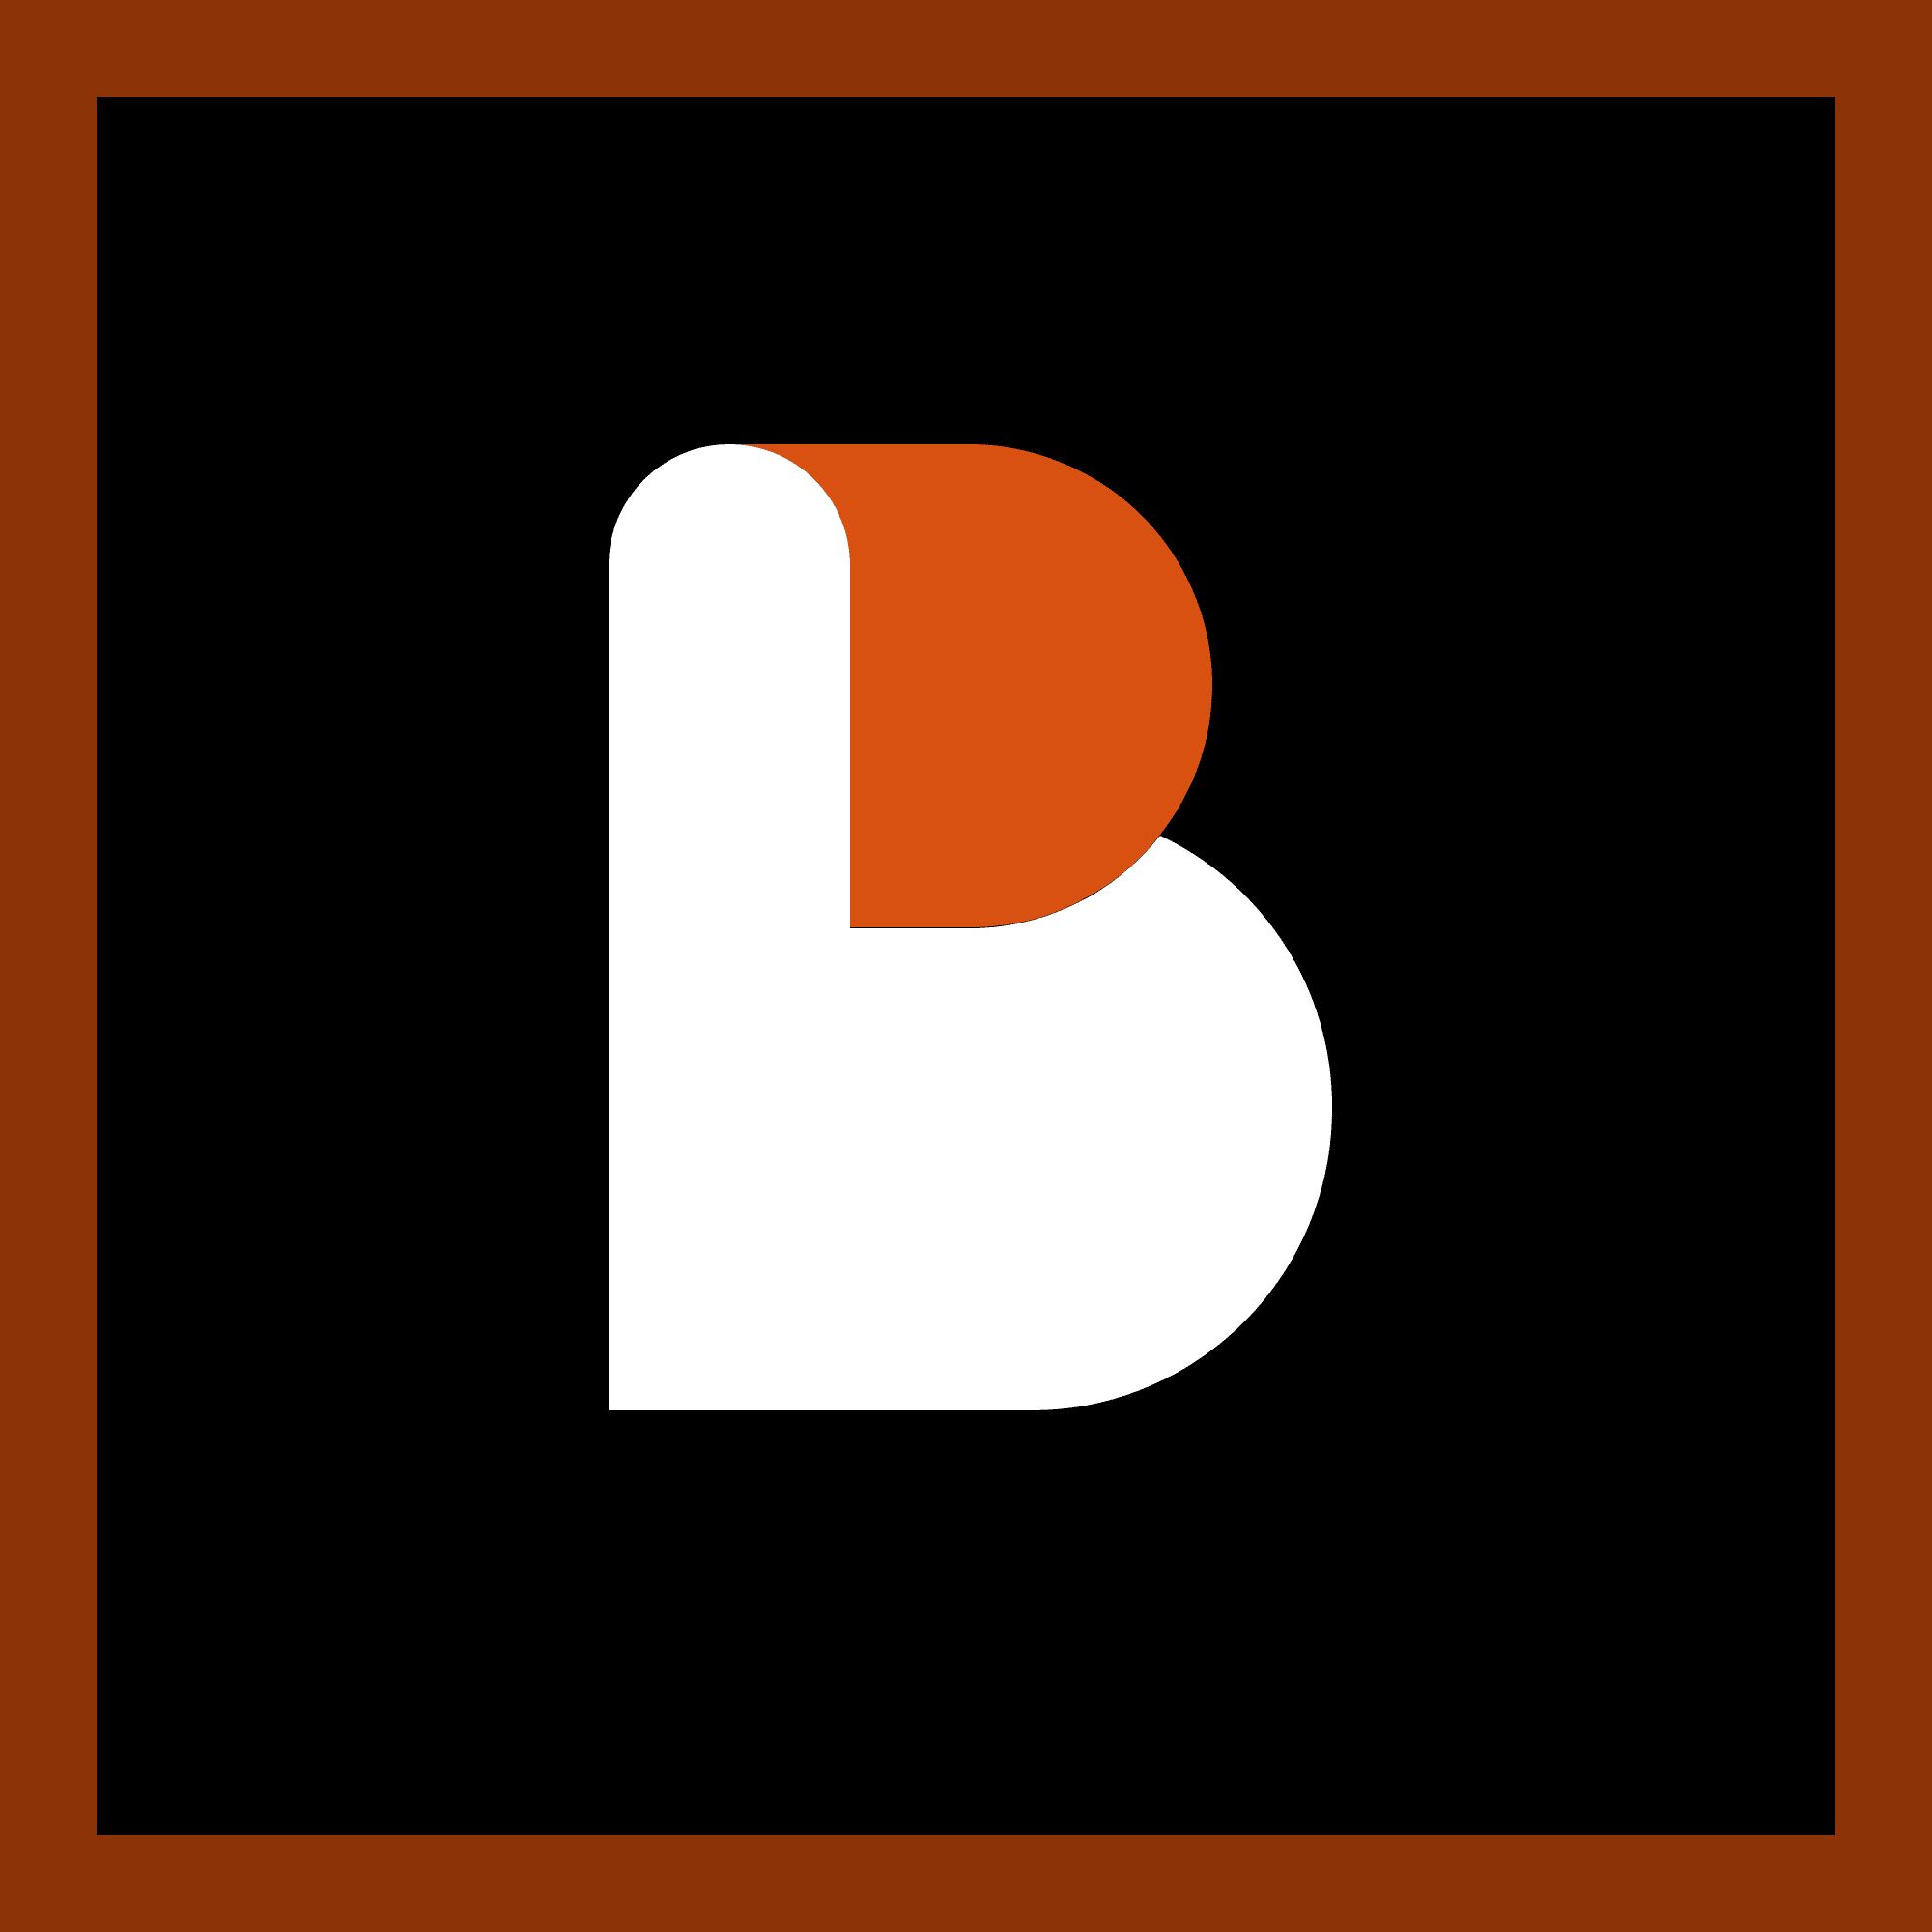 Biconomy logo in png format